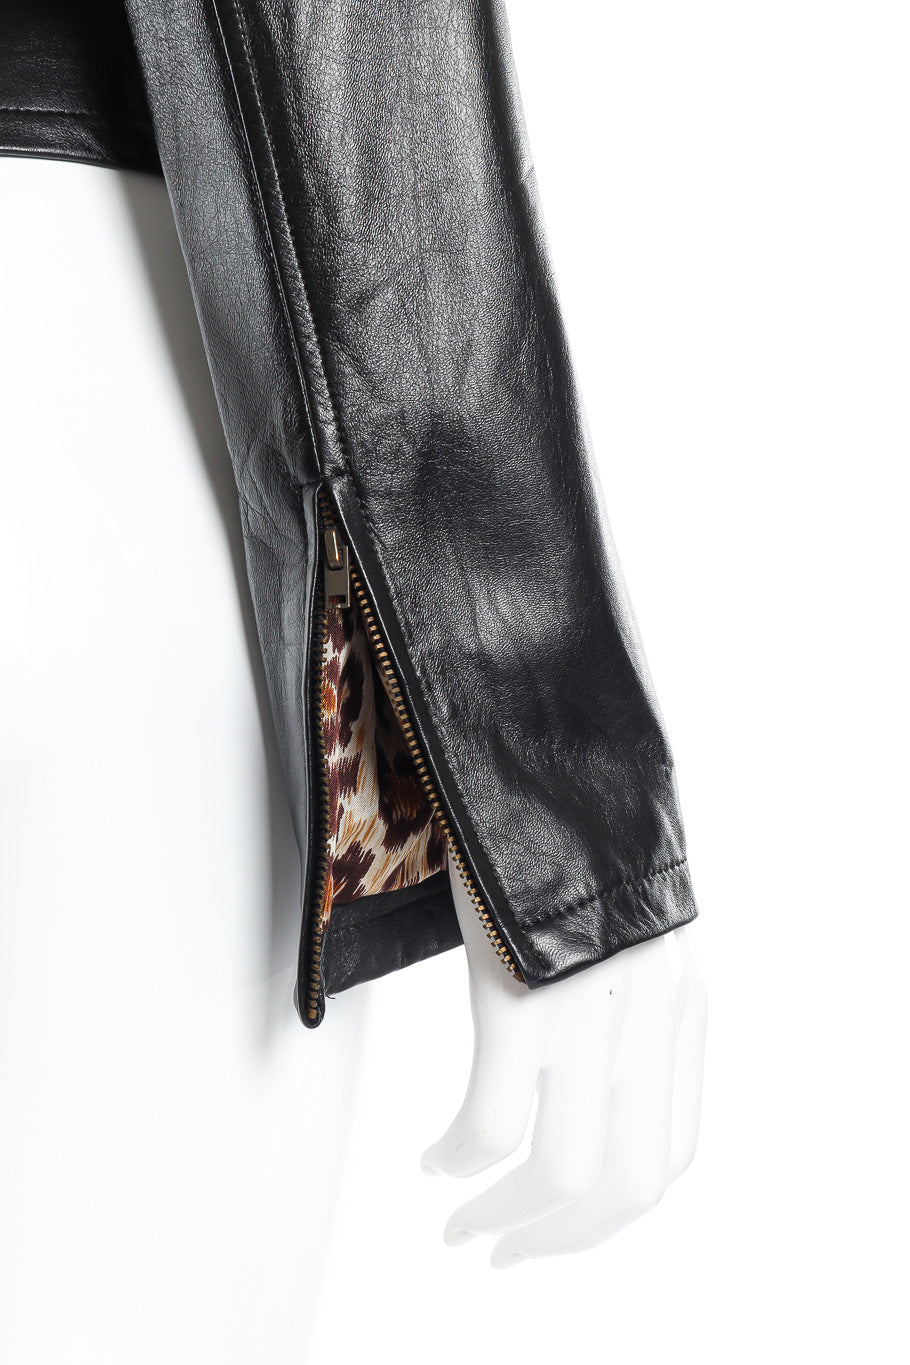 Dolce & Gabbana leather panther jacket sleeve zipper detail @recessla